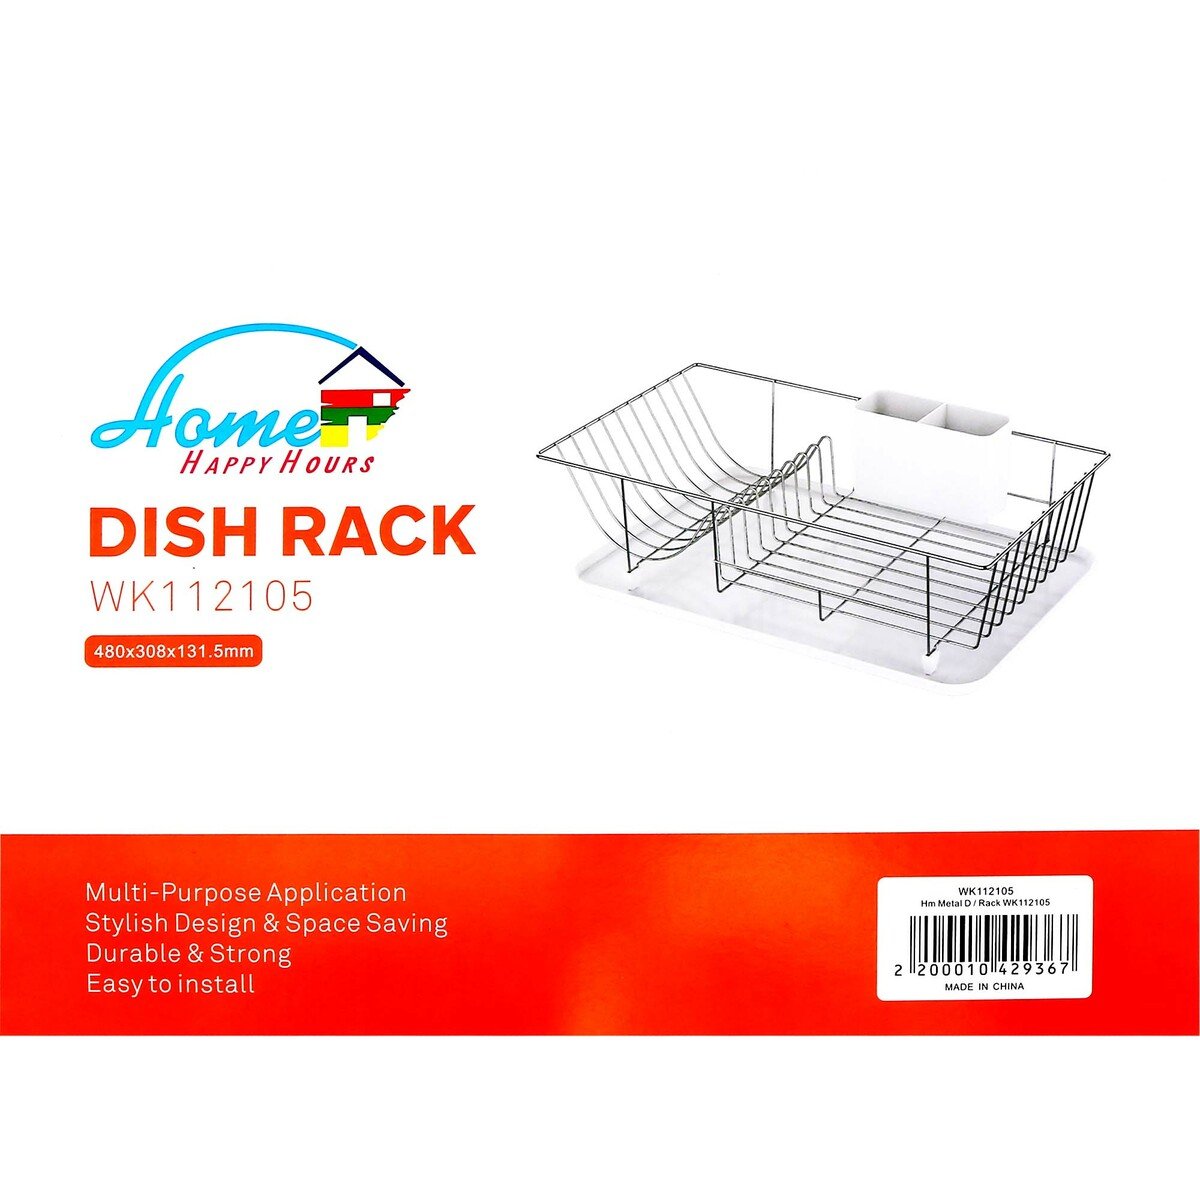 Home Metal Dish Rack WK112105 Size: 48x30.8x13.15cm